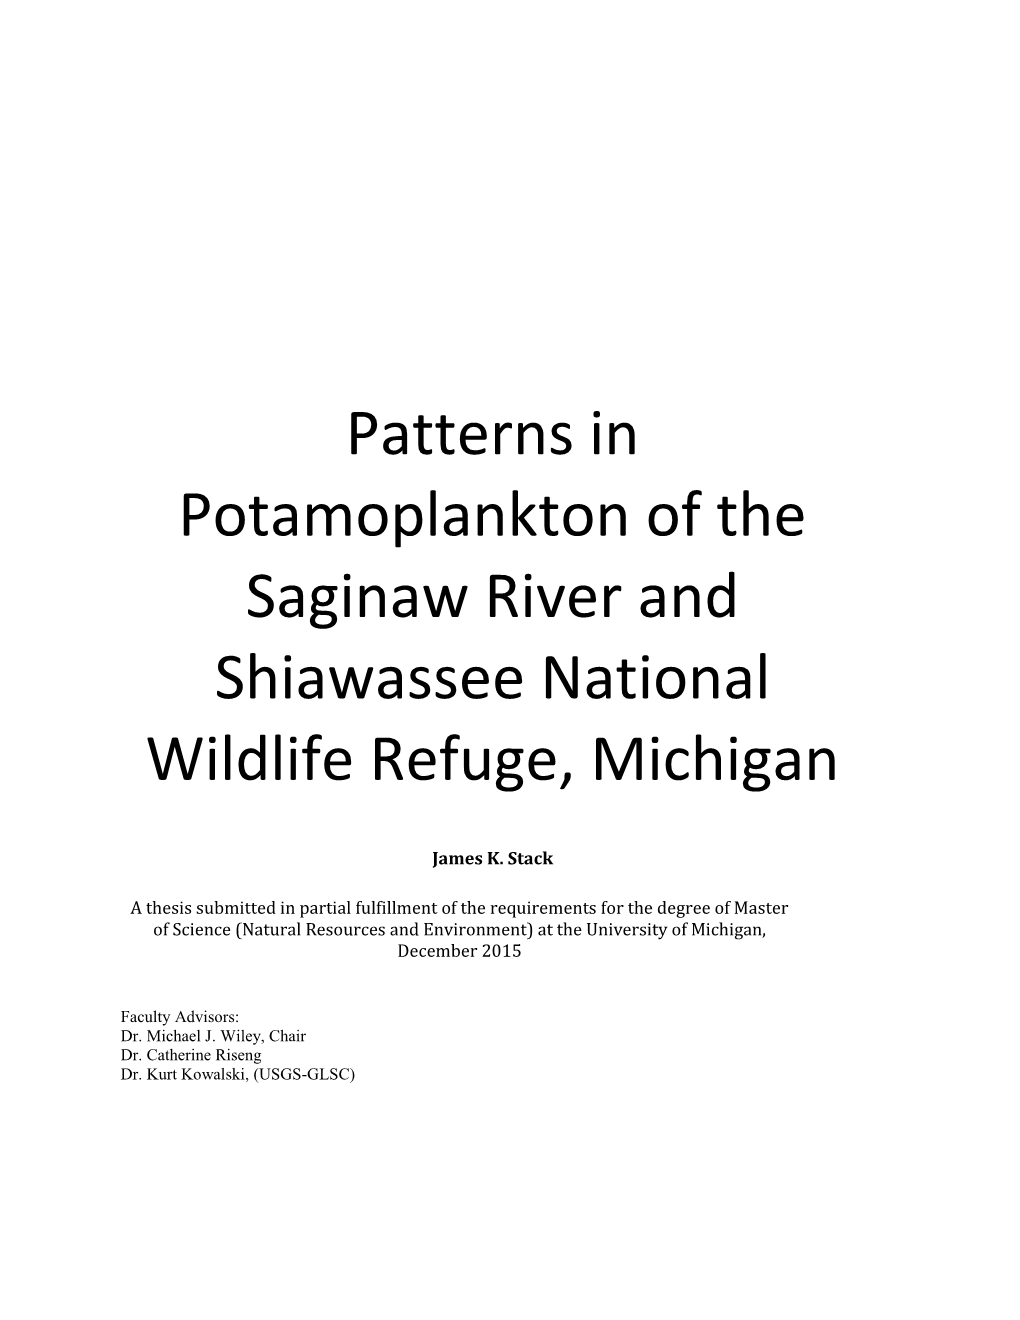 Patterns in Potamoplankton of the Saginaw River and Shiawassee National Wildlife Refuge, Michigan